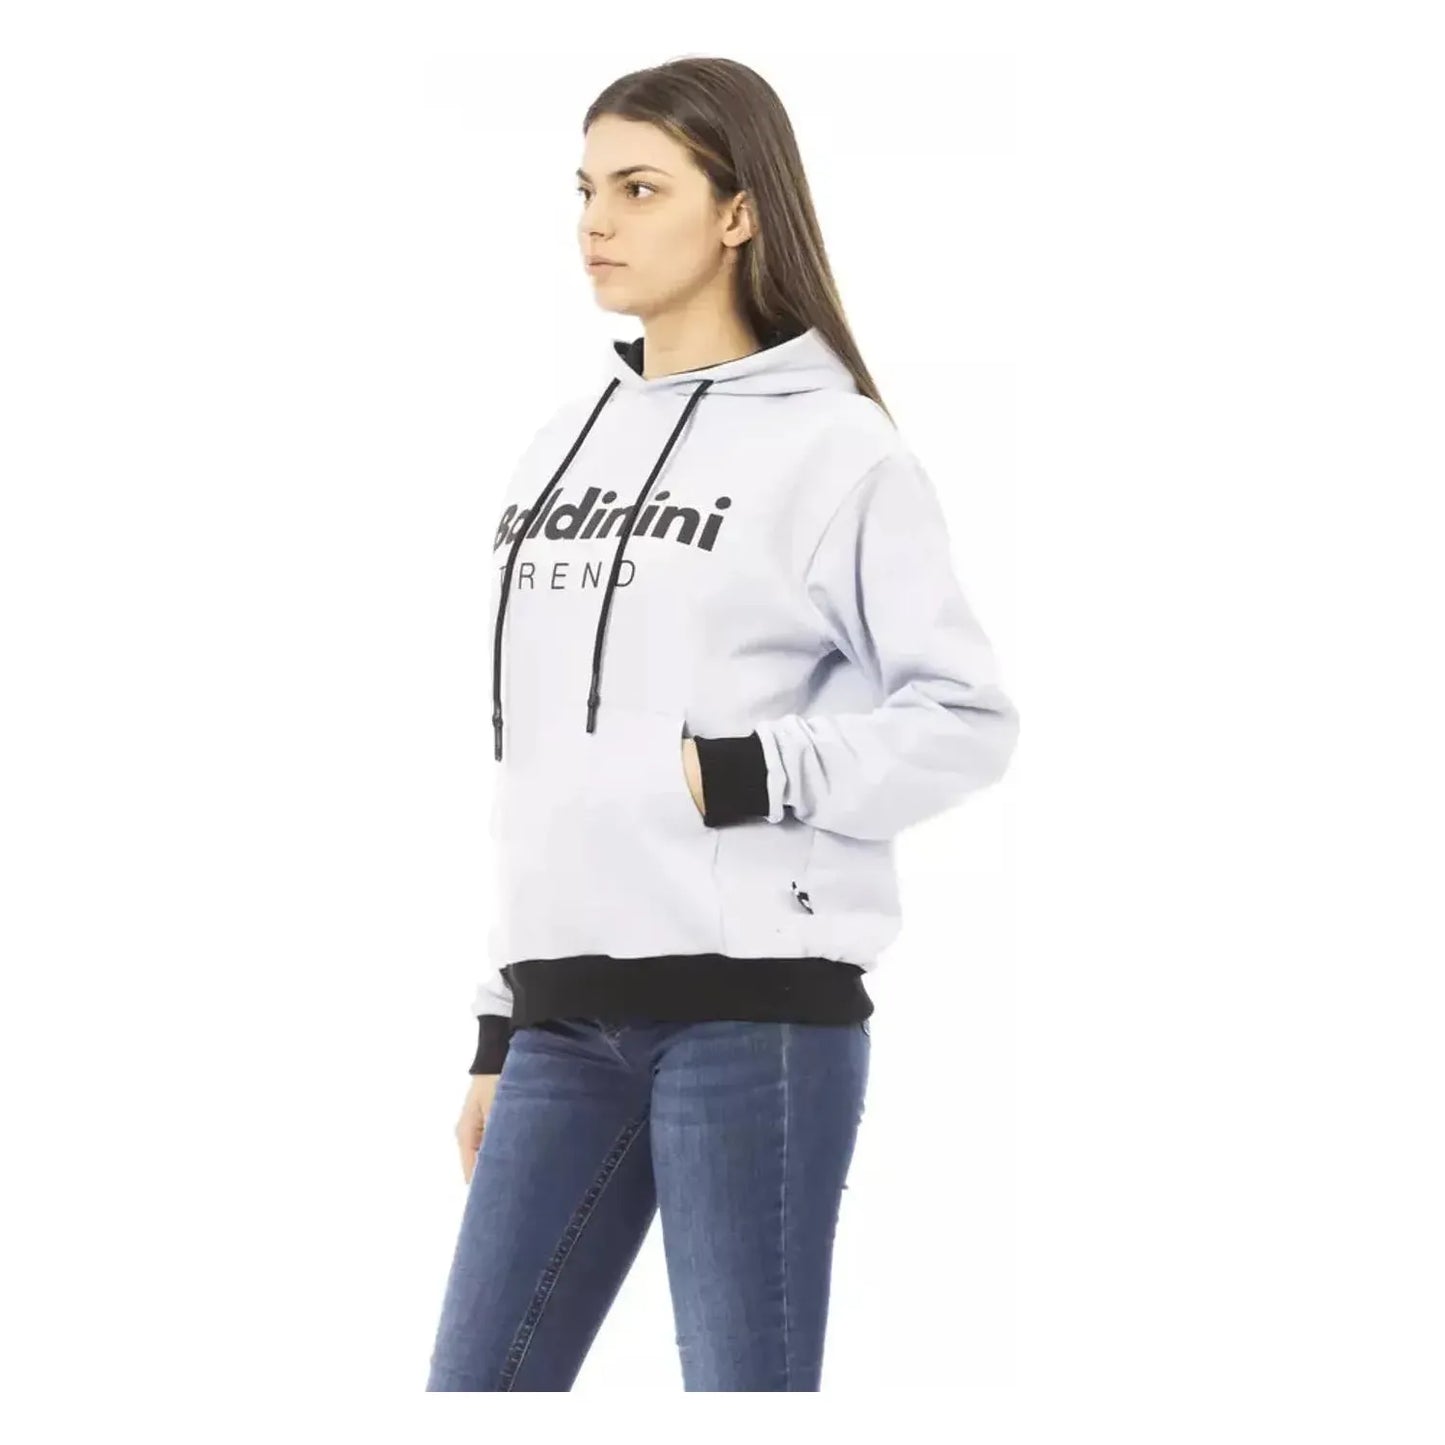 Baldinini Trend Chic White Cotton Fleece Hoodie with Front Logo white-cotton-sweater-11 product-22526-937189101-21-2da52520-6b6.webp